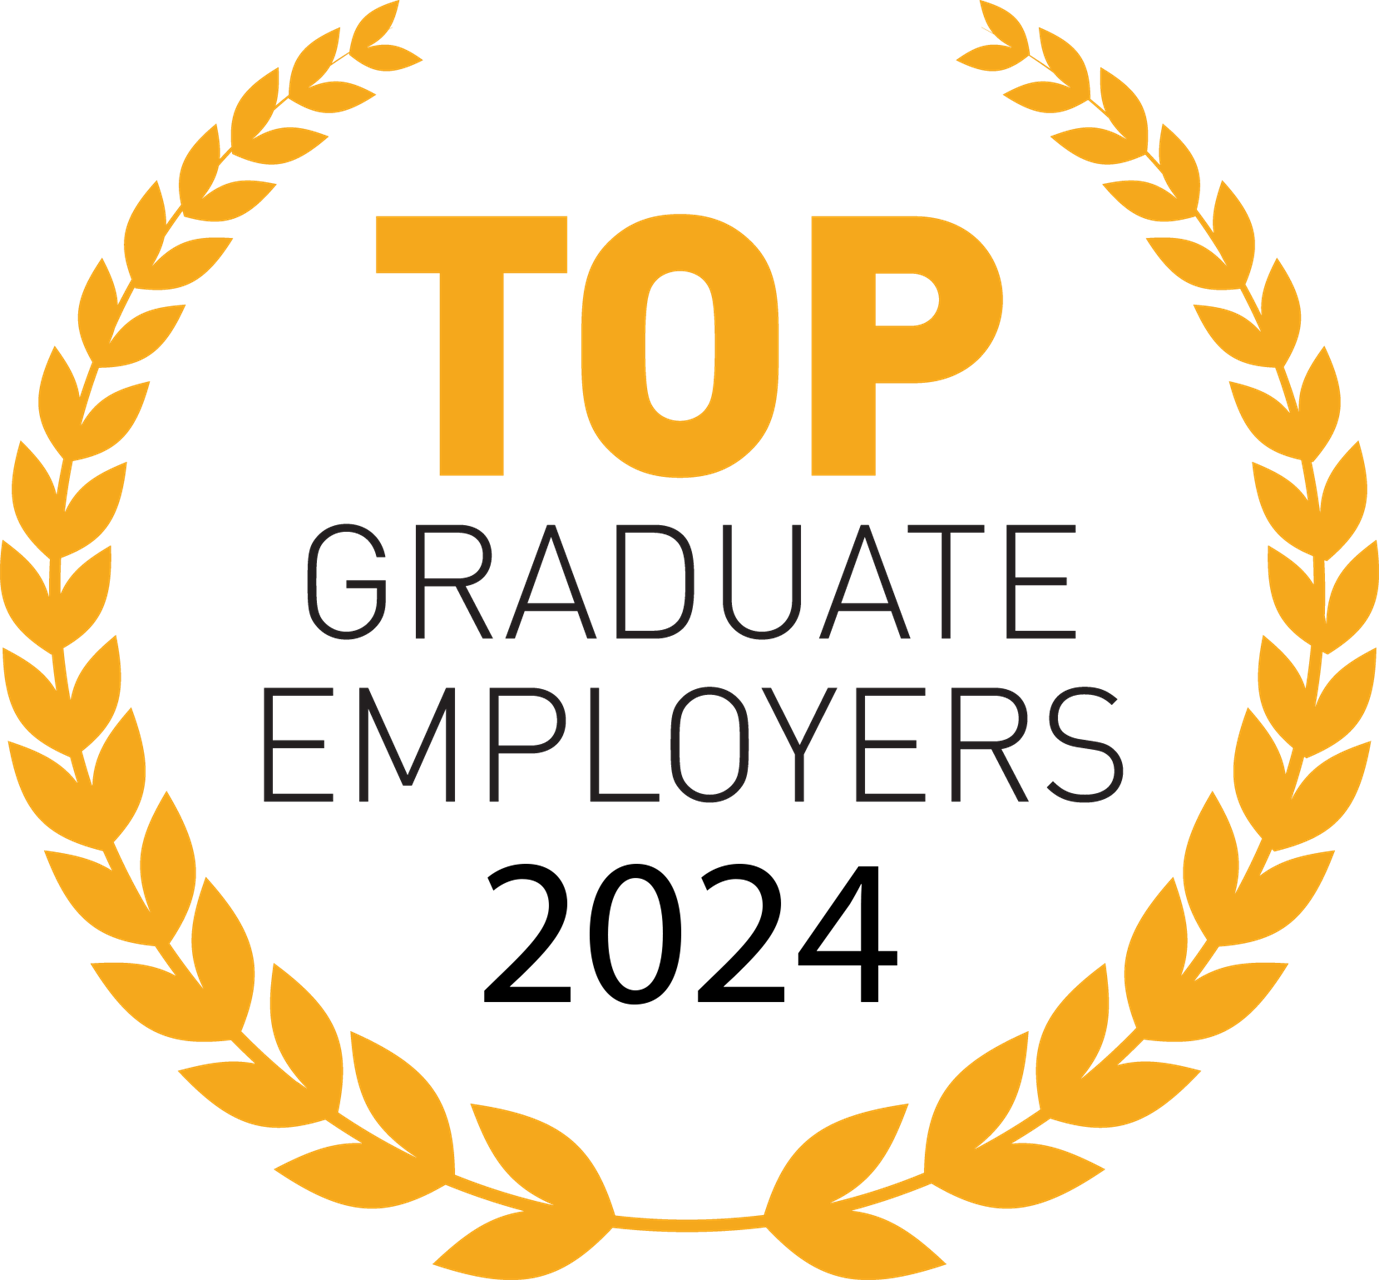 Top graduate employer